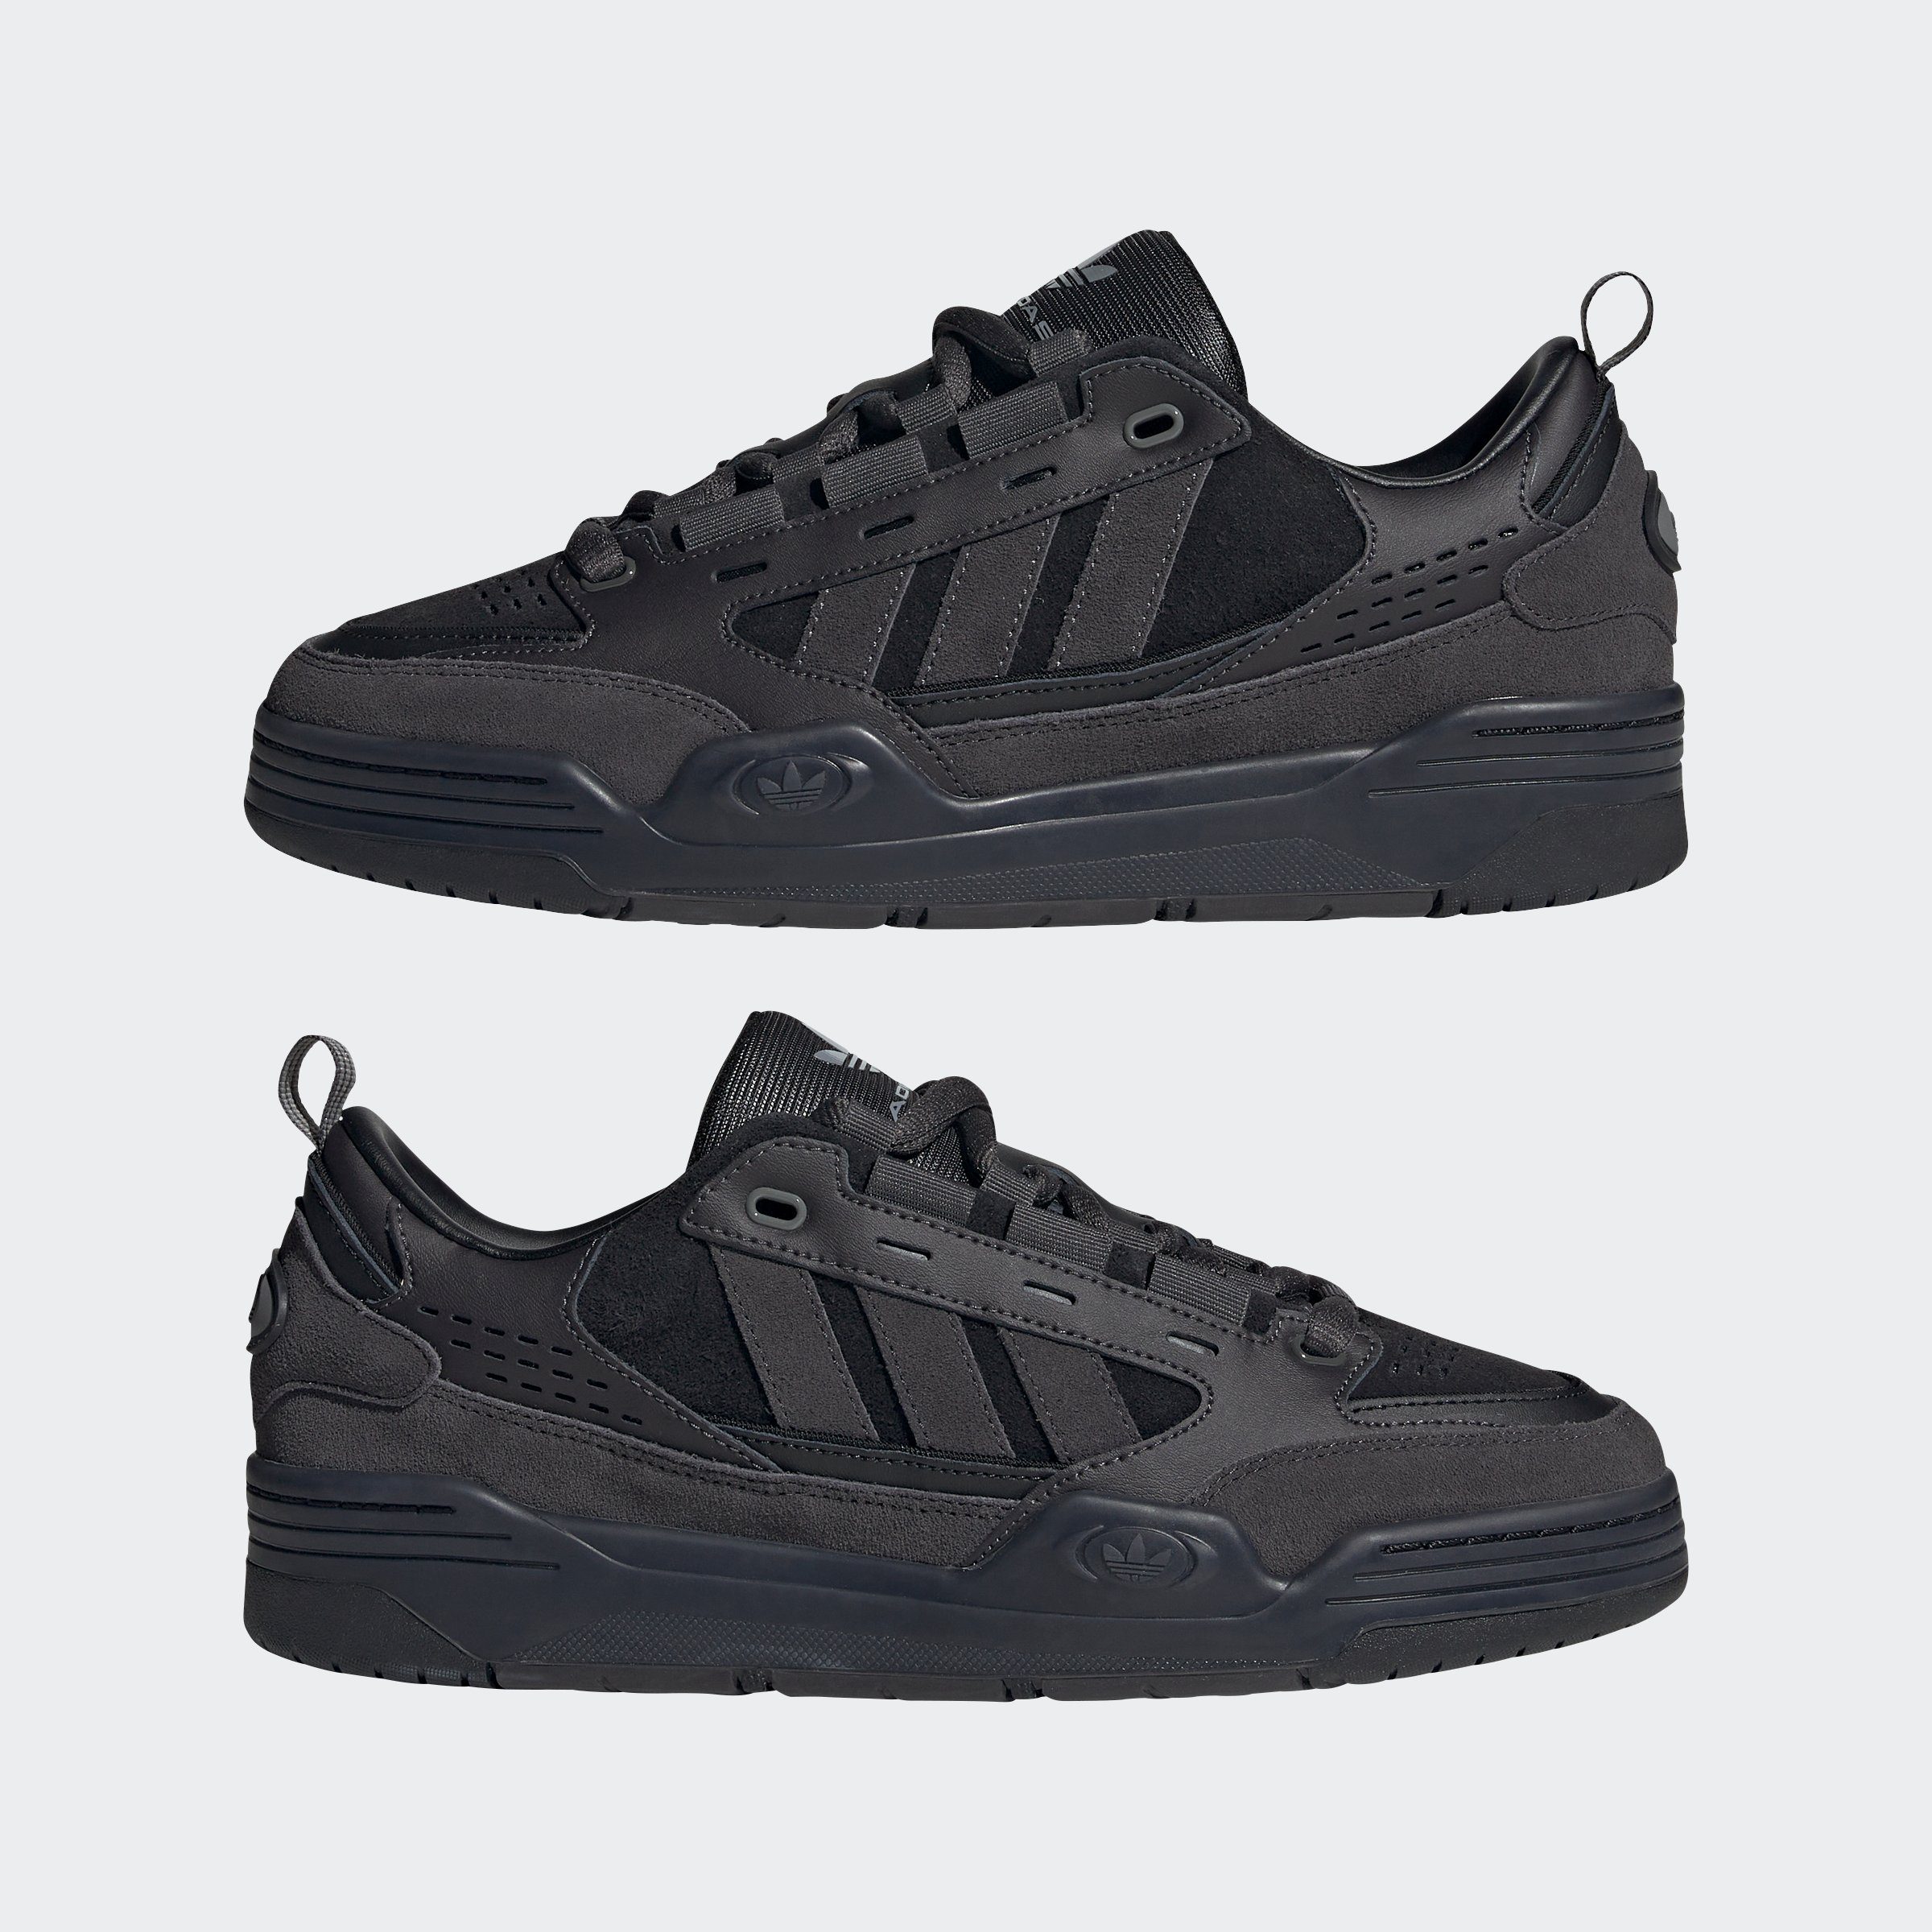 Originals Utility Black / ADI2000 Core Black Black Sneaker / Utility adidas